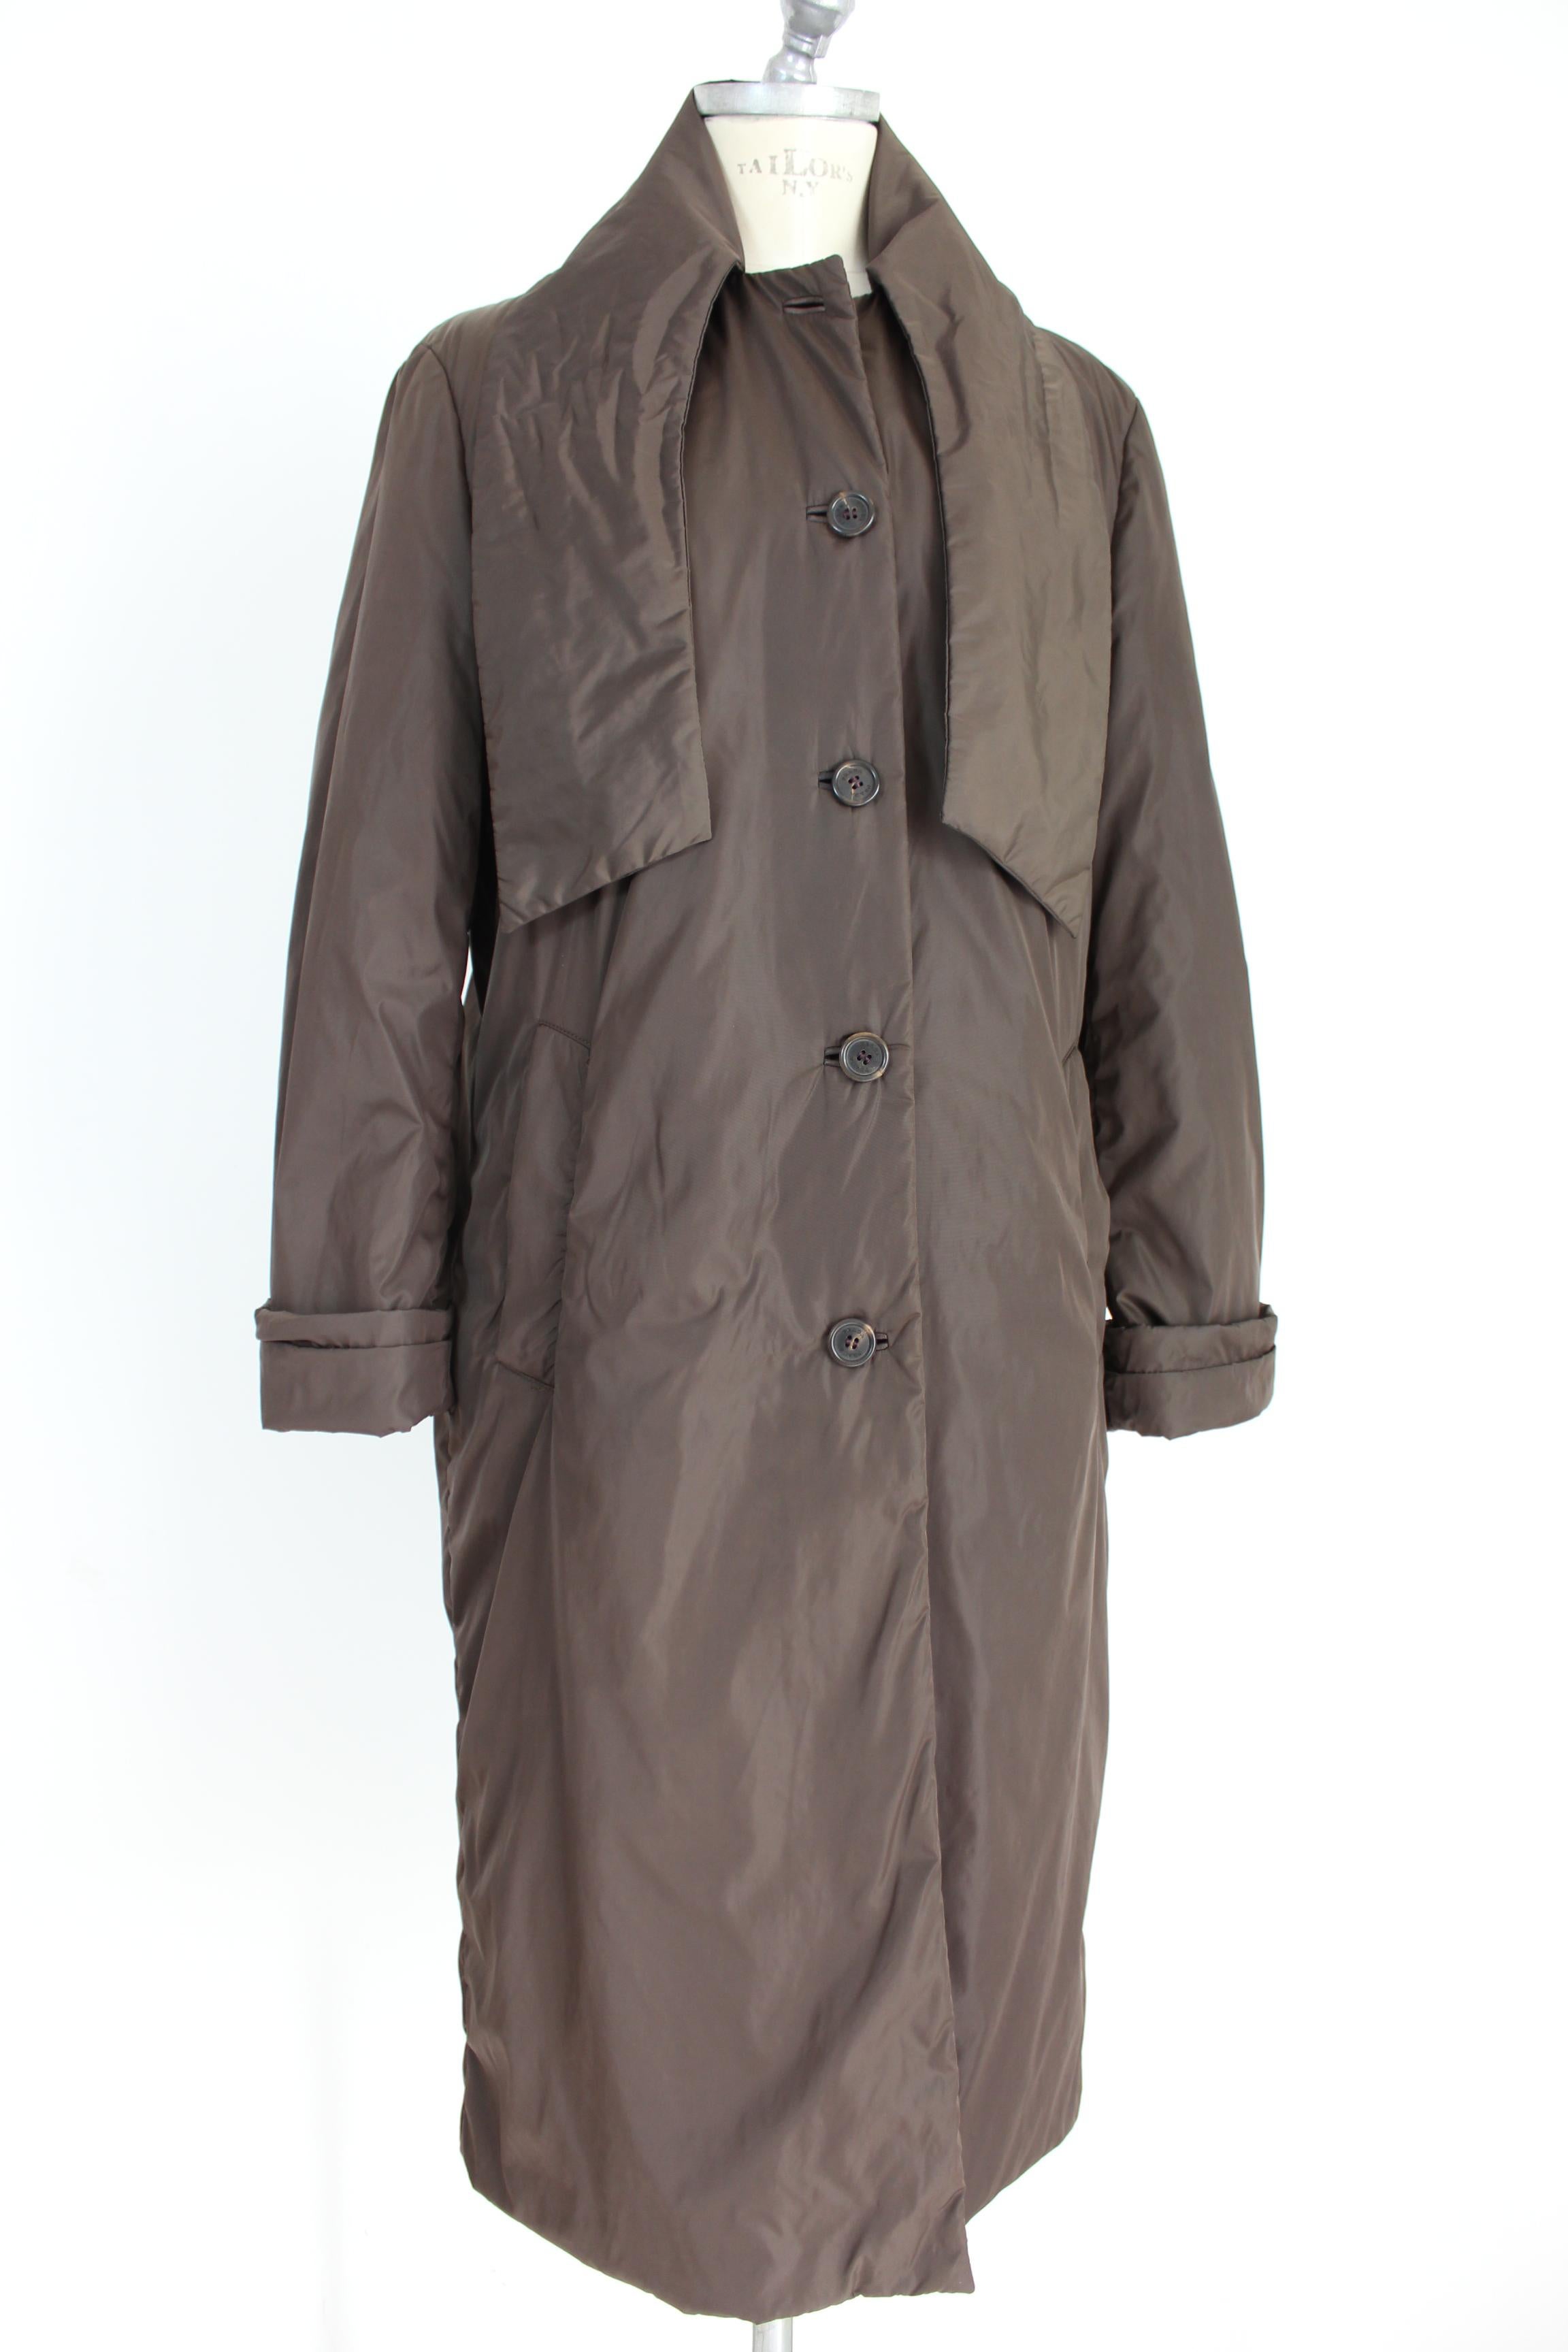 Prada Brown Shawl Down Jacket Long Coat  1